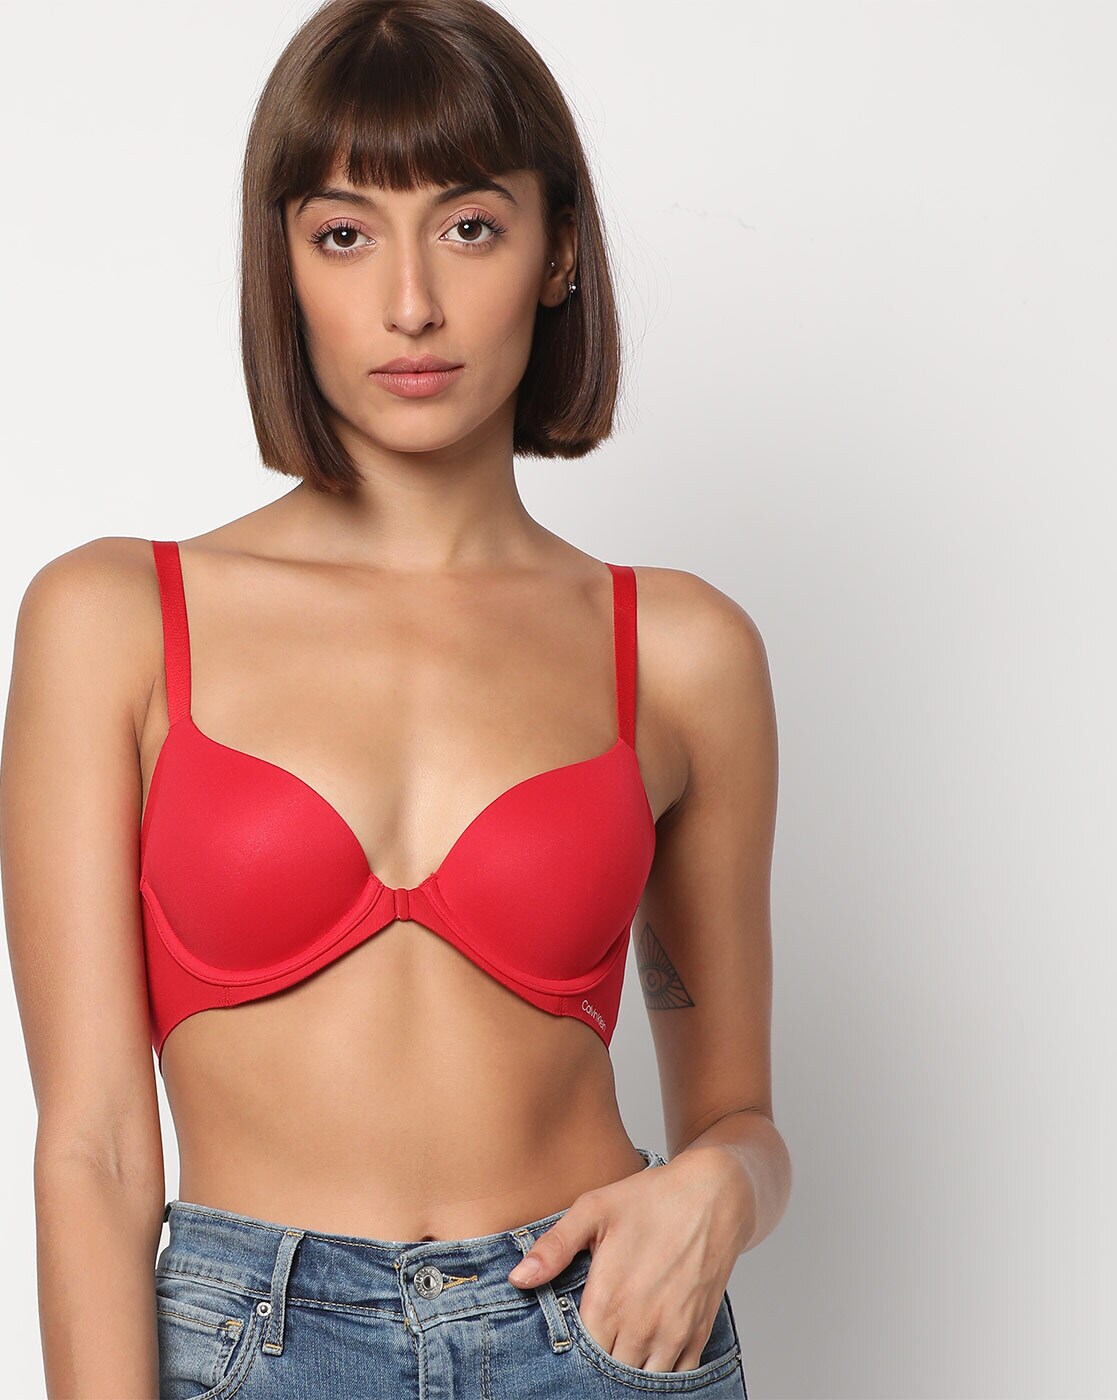 Calvin Klein F3827 Red Perfectly Fit Moderen T-Shirt Underwire Bra 34A💖 